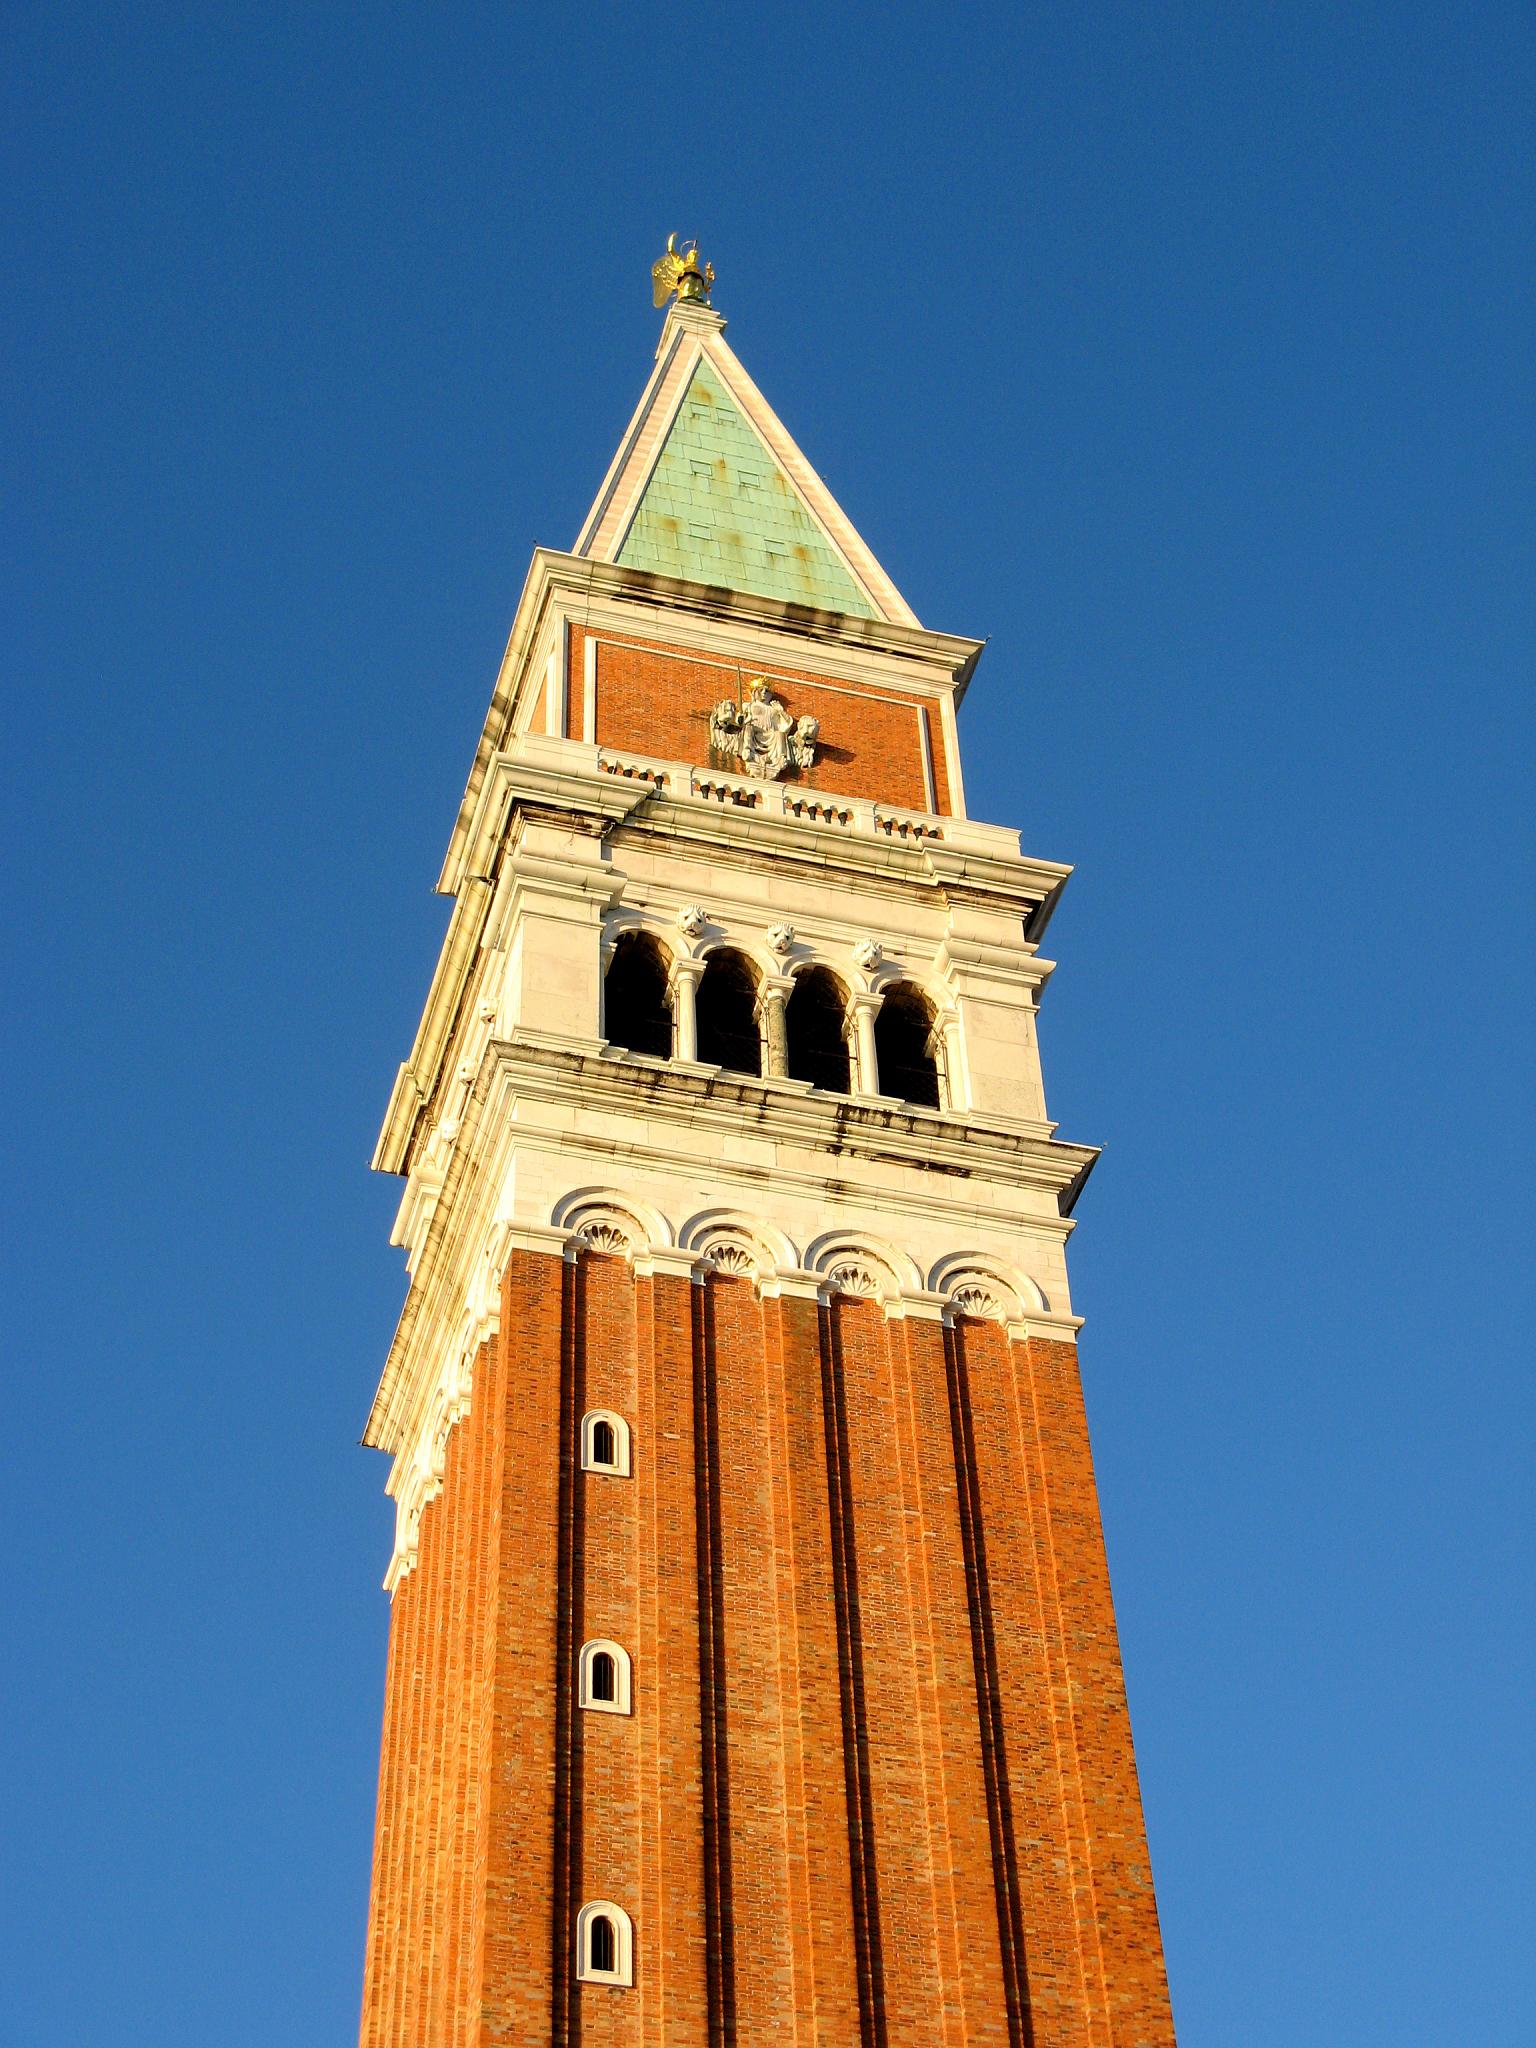 an ornate brick clock tower against a blue sky